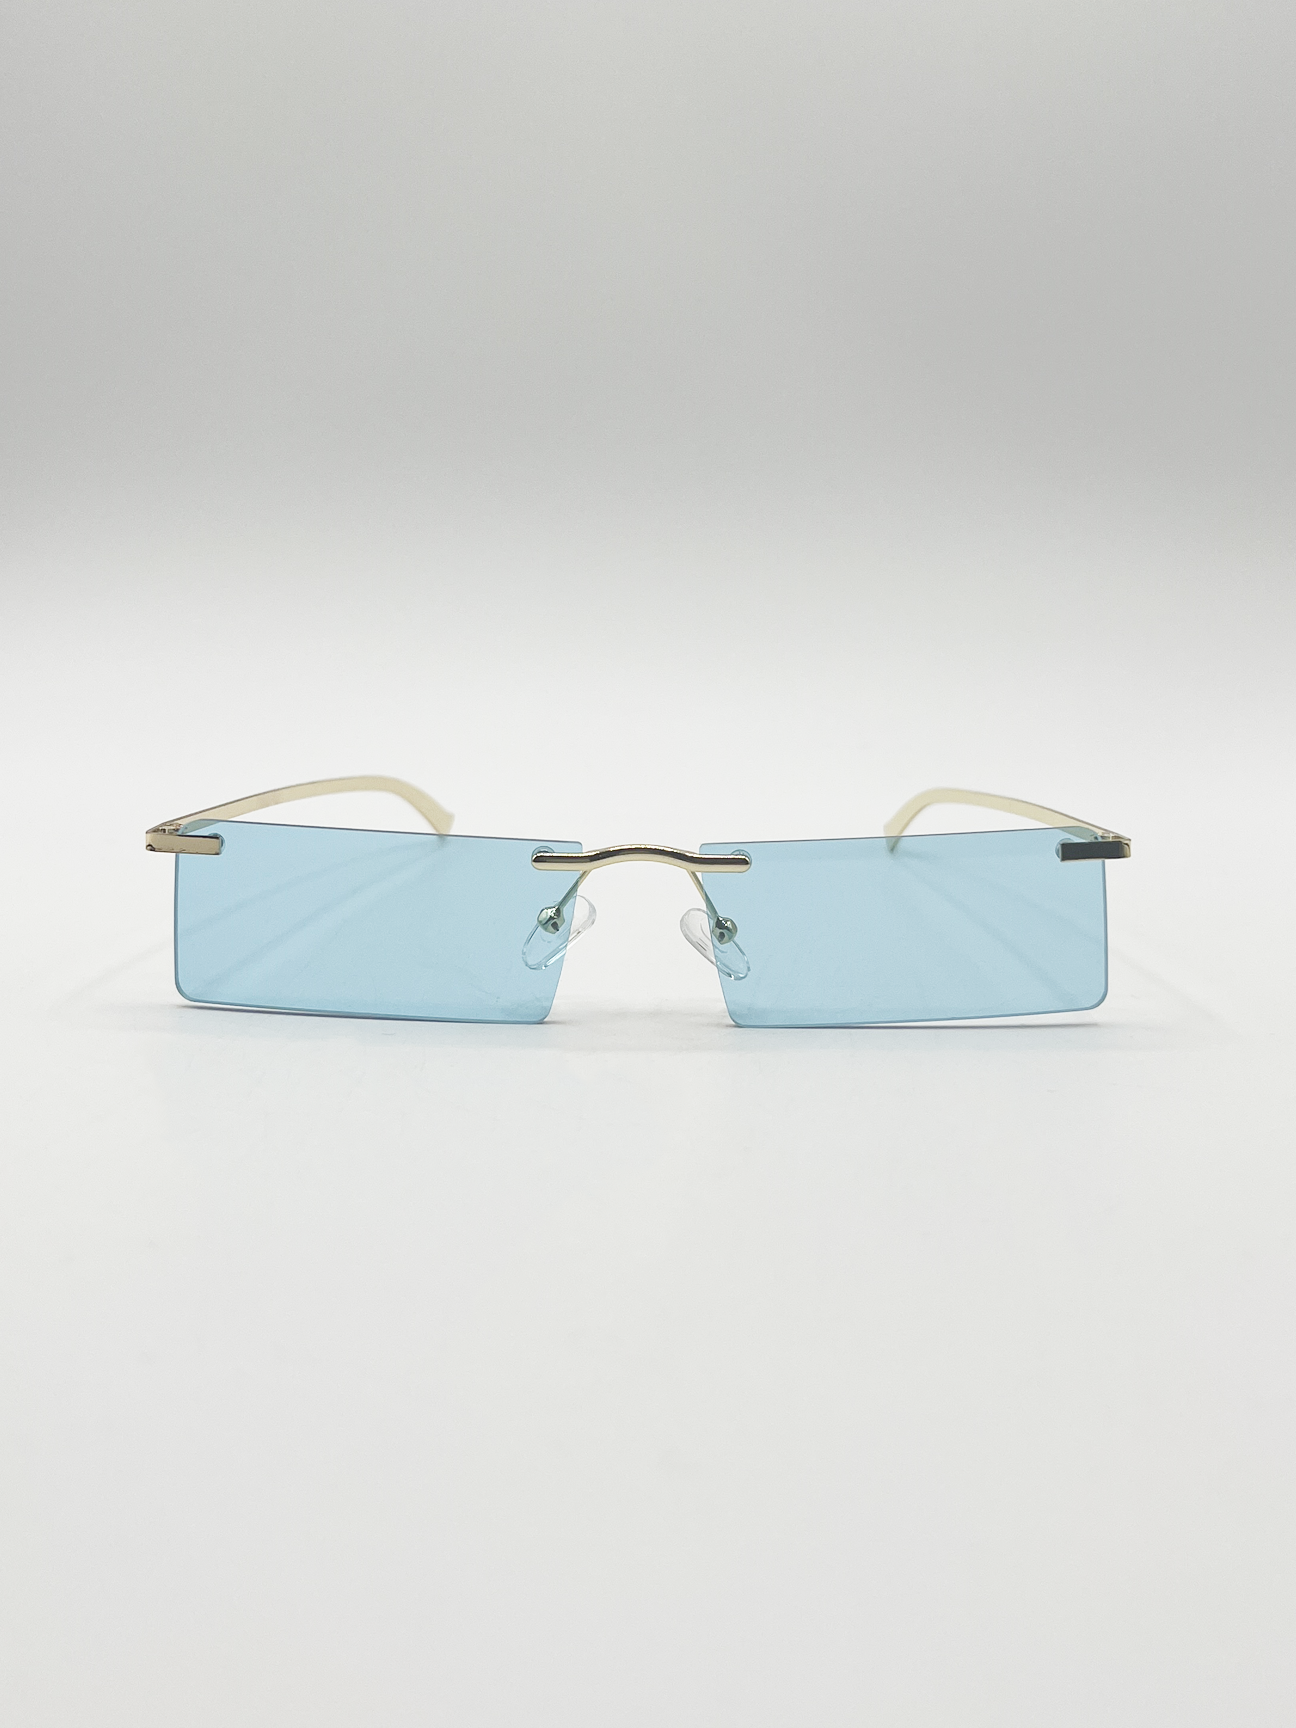 Frameless Rectangle Sunglasses in Pale Blue